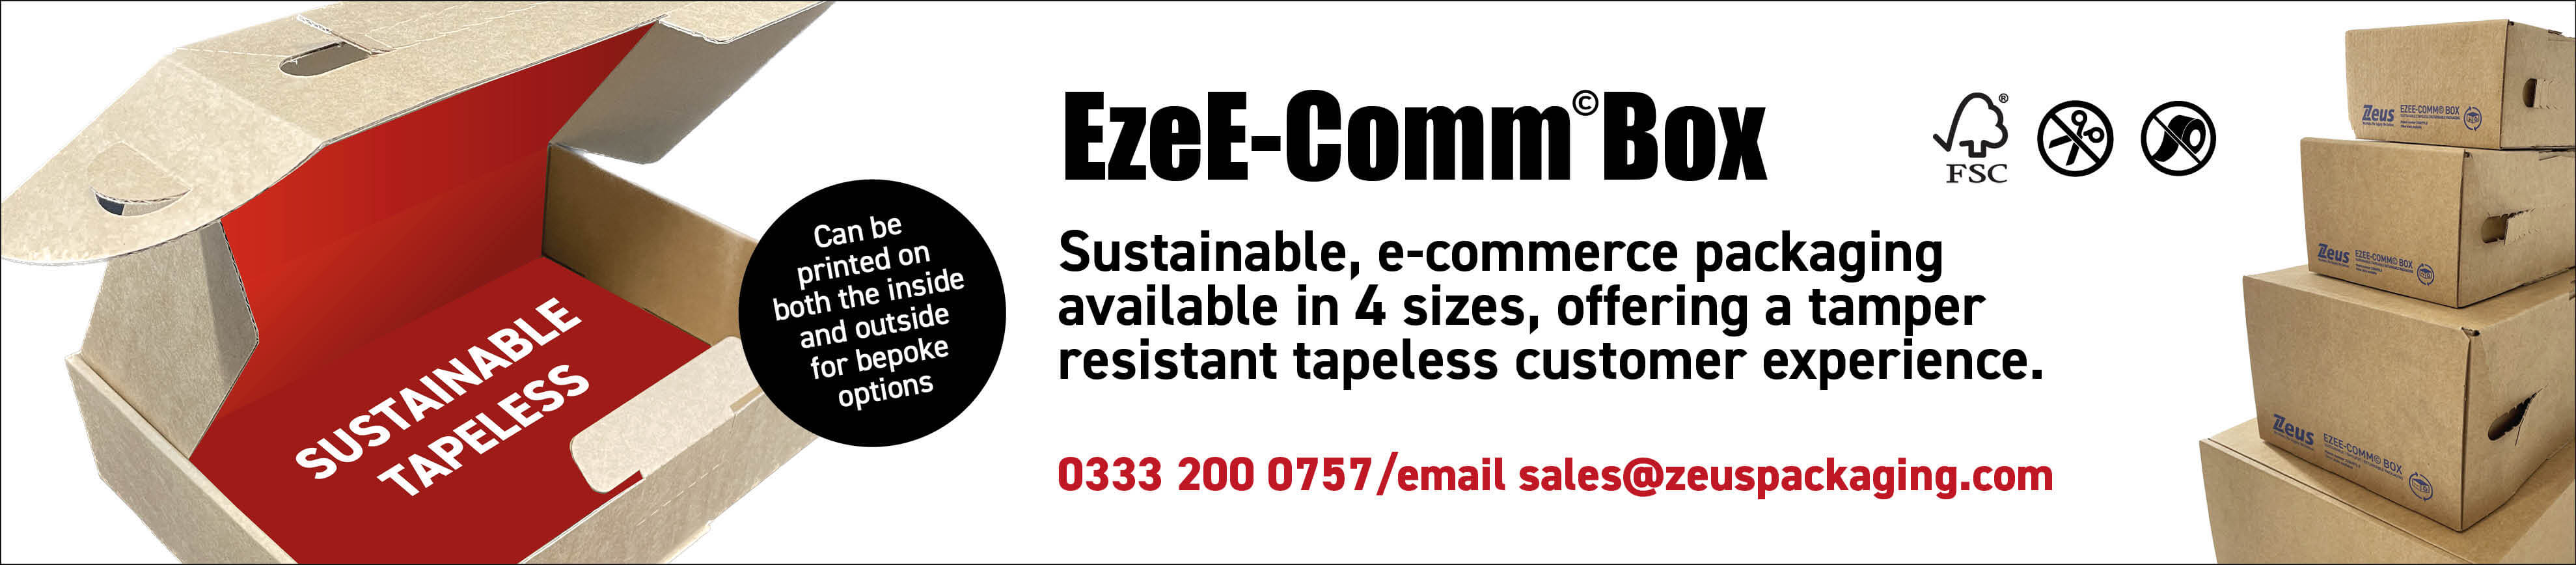 Ezee-com Box Banner